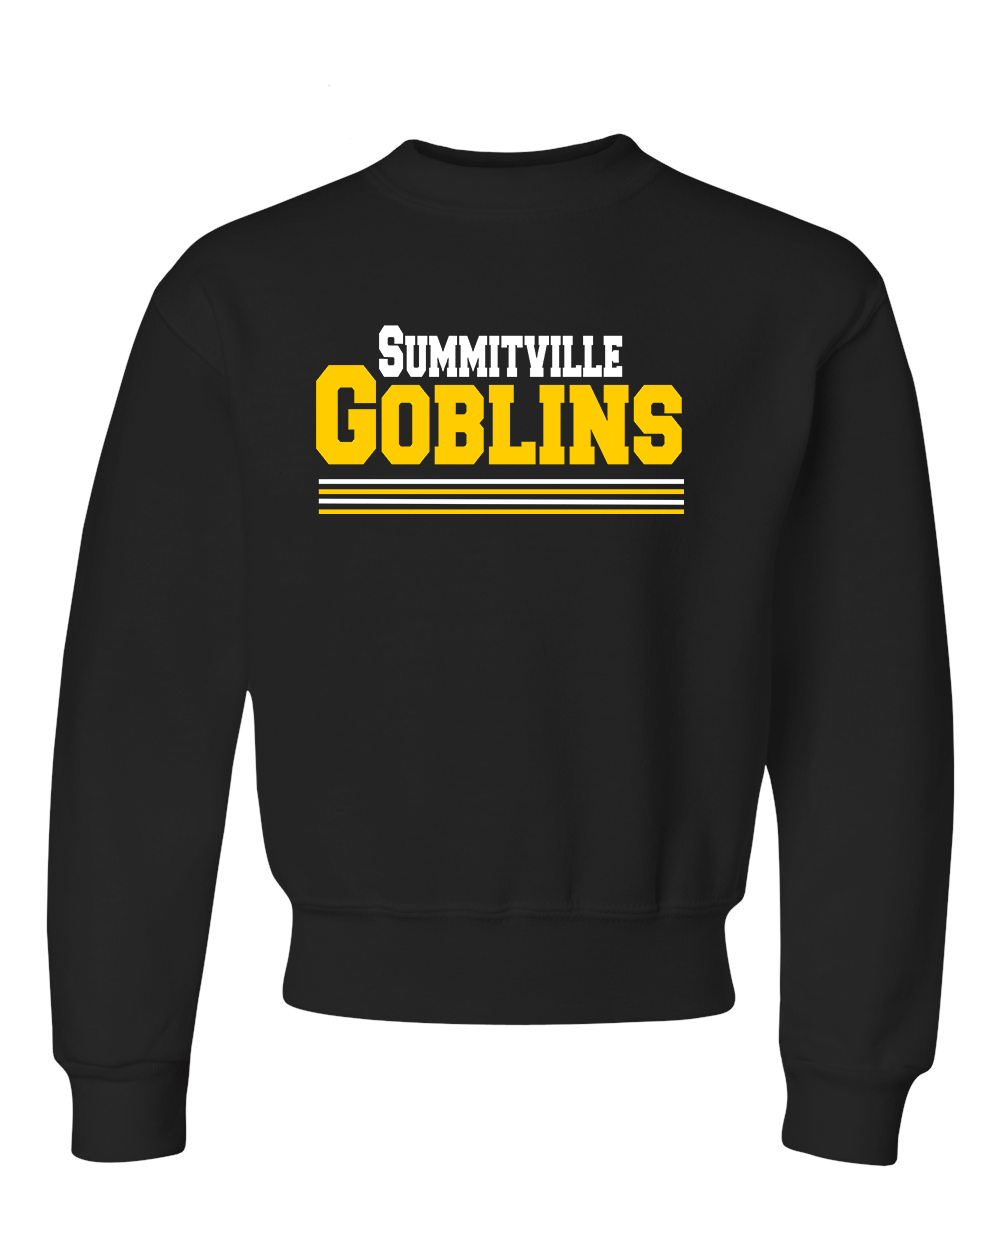 Youth Summitville Goblins Crew Sweatshirt - Black